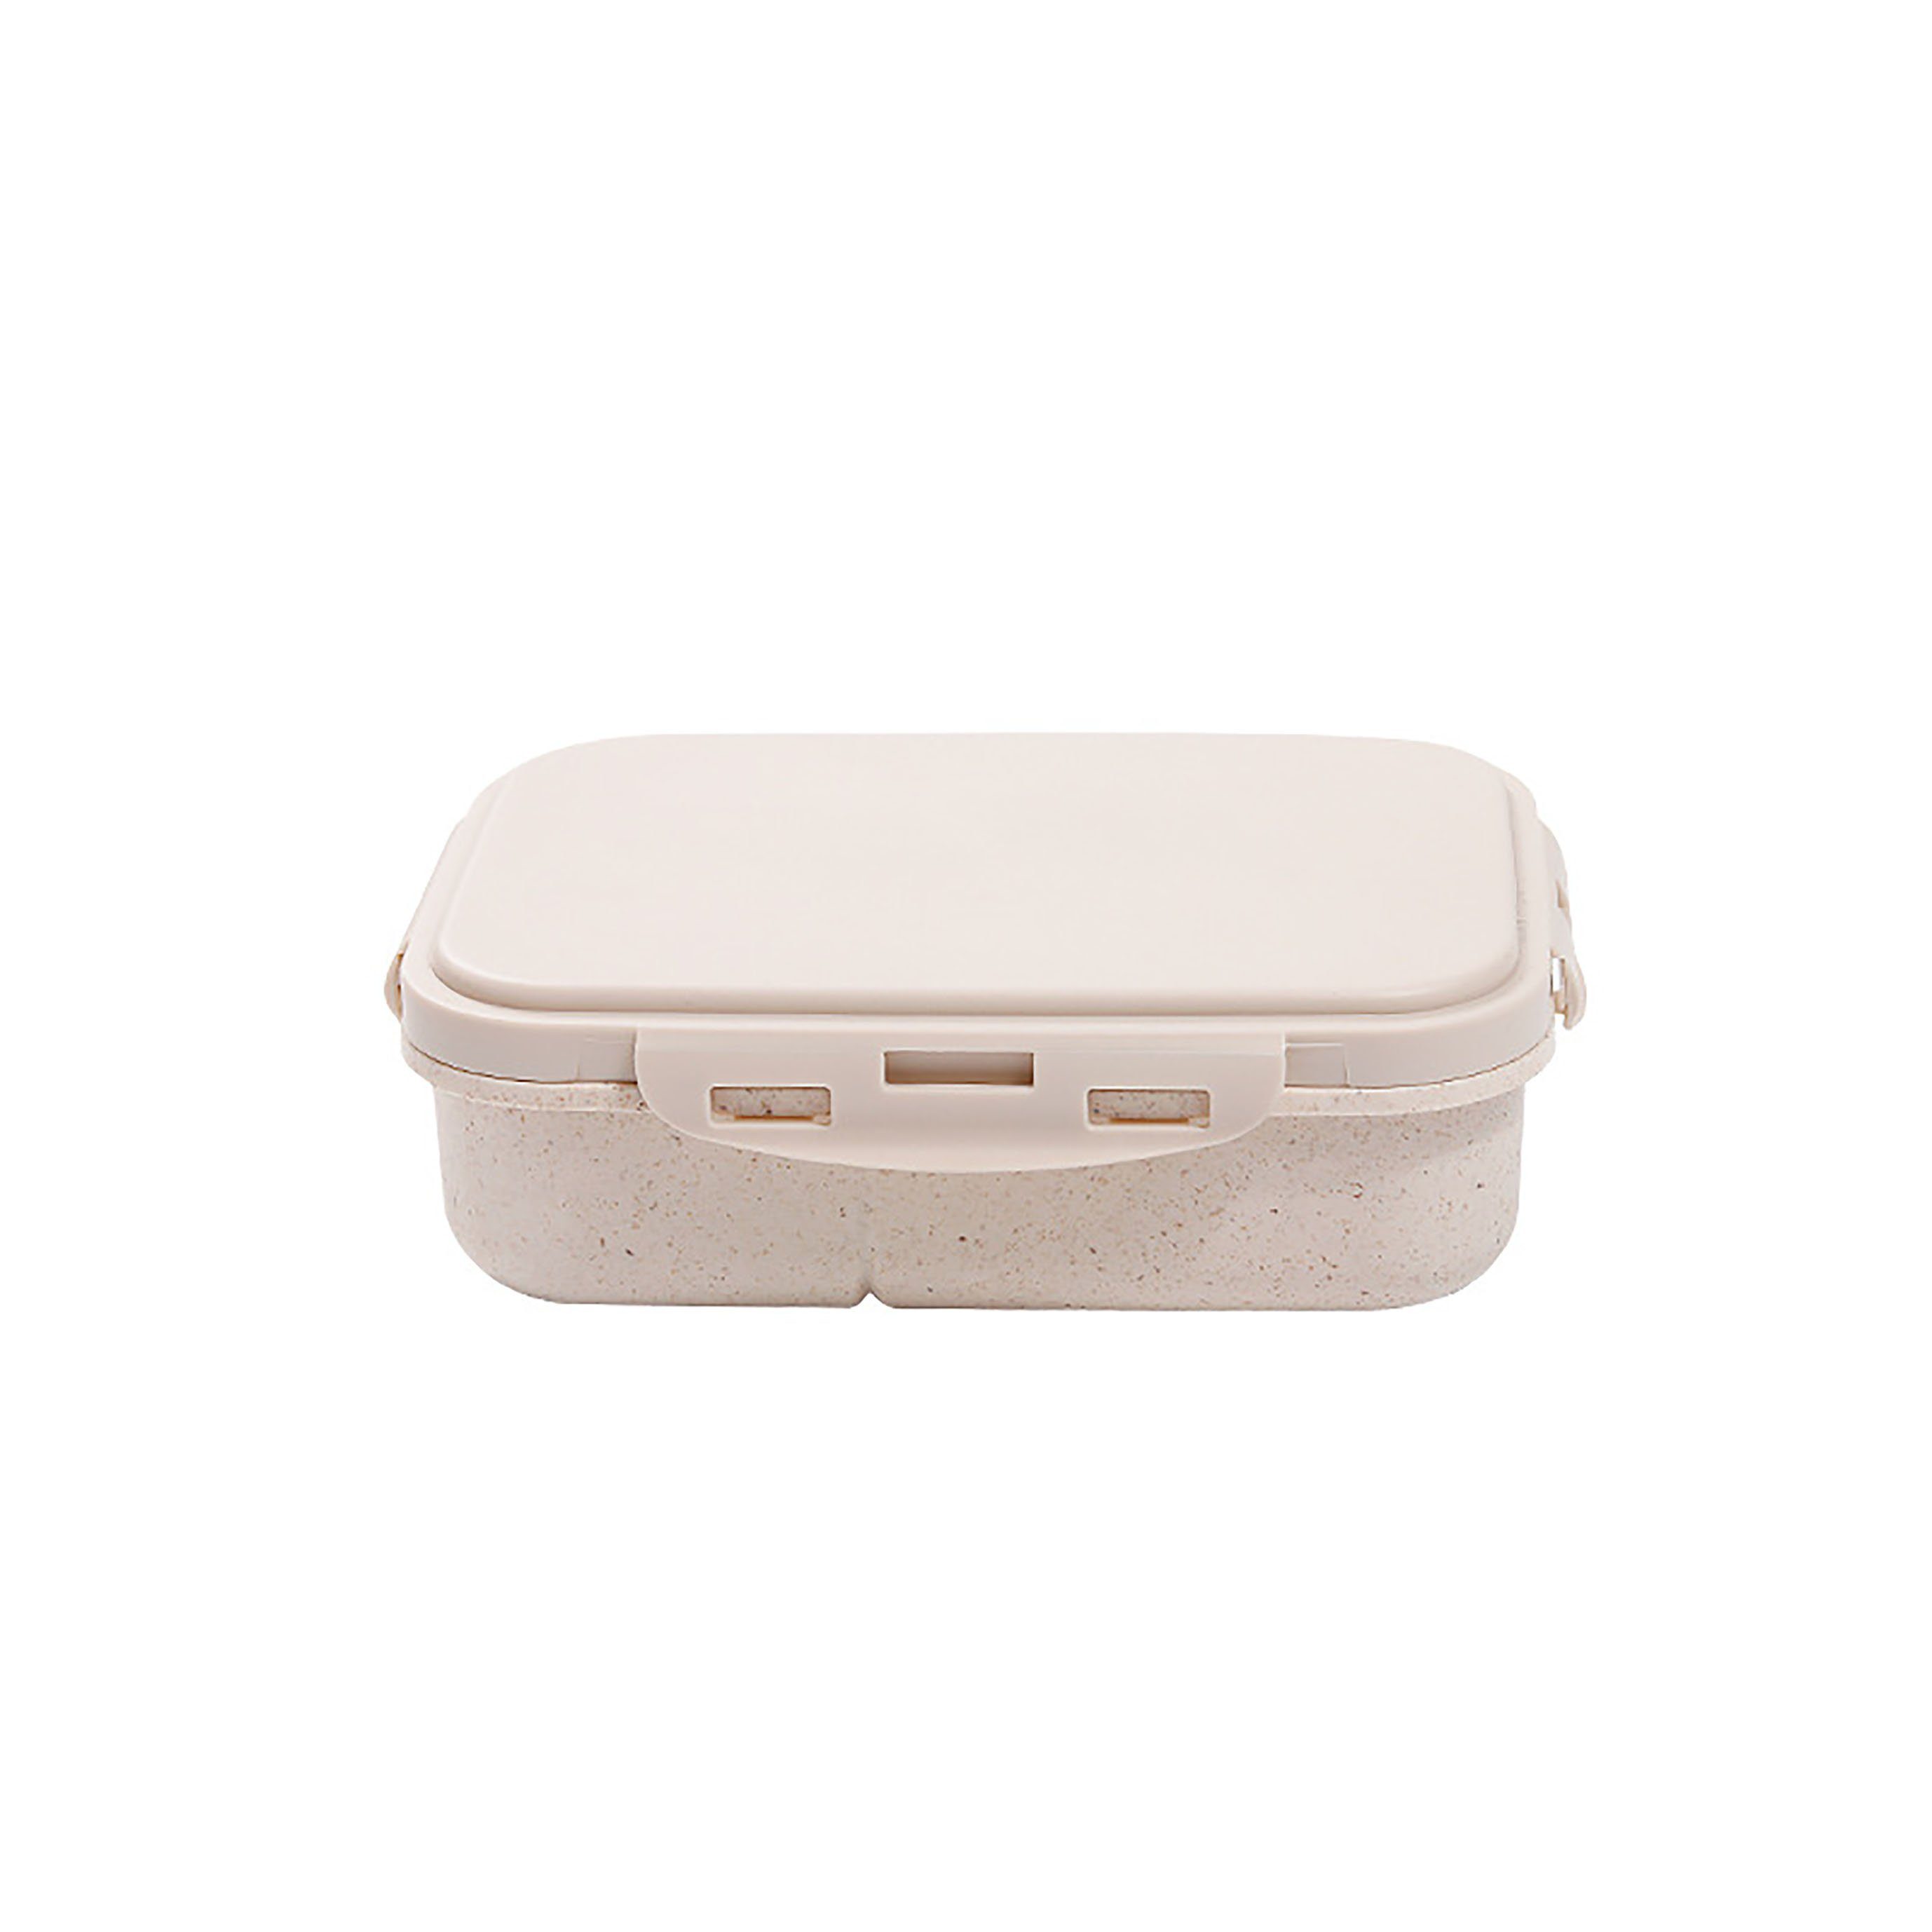 SRRINM Lunchbox Plastik Lunch Box Fach Bento Box